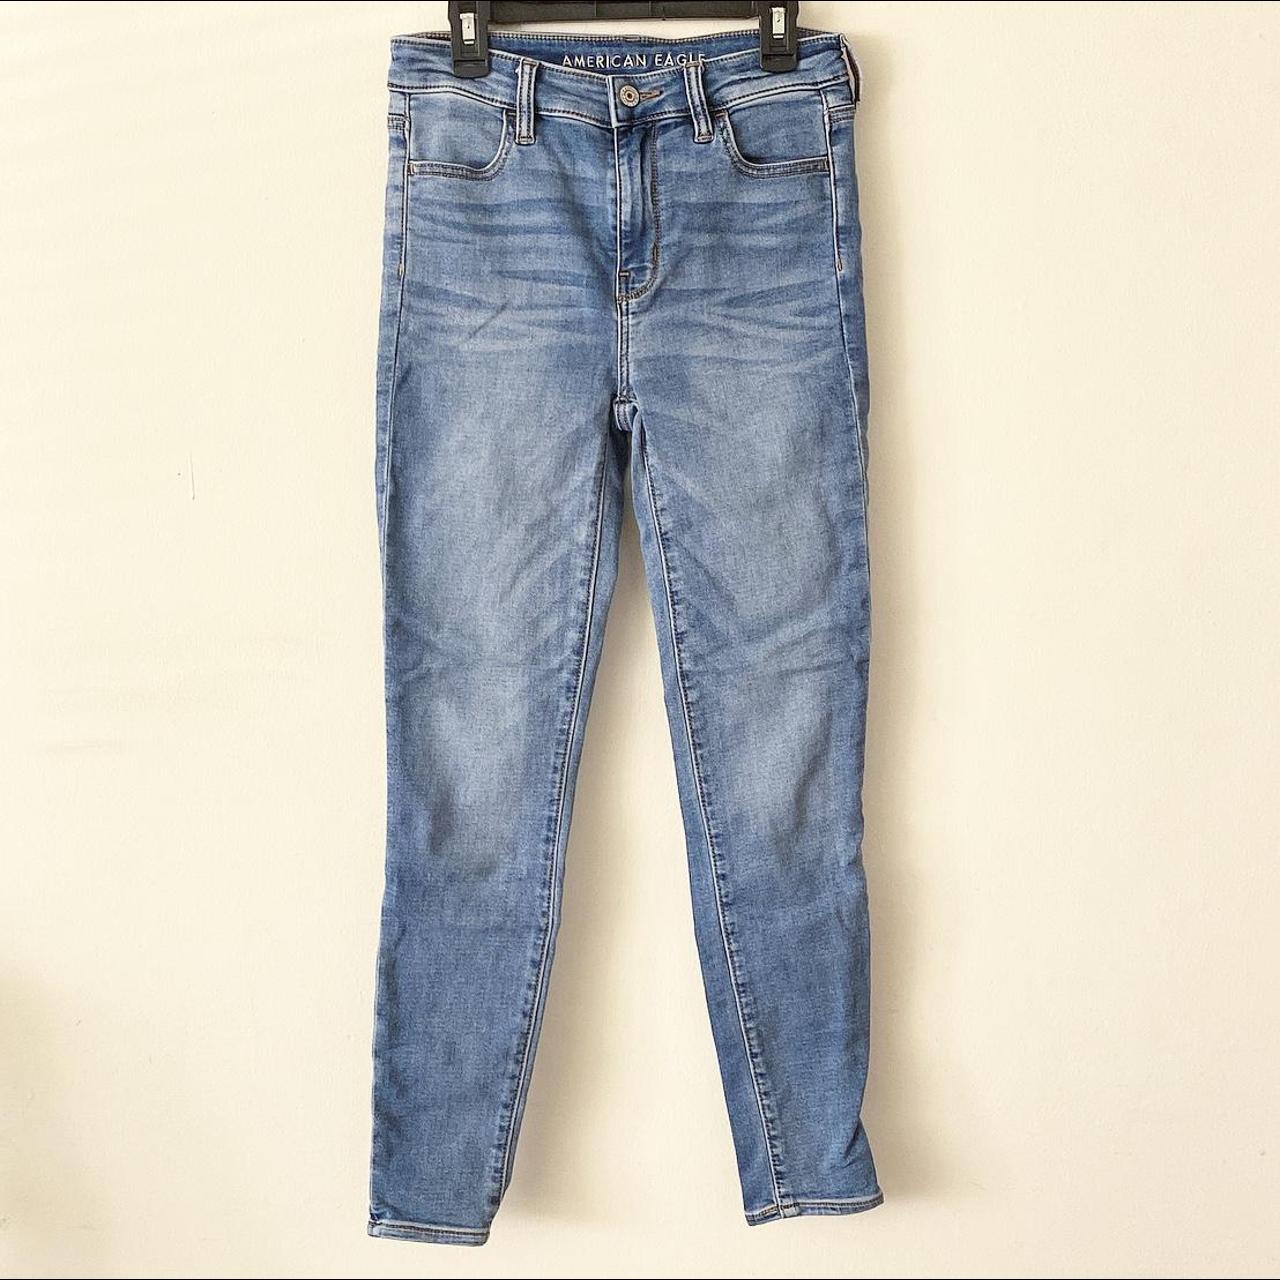 AMERICAN EAGLE Women's Jegging Super Stretch blue Jeans, Size 2